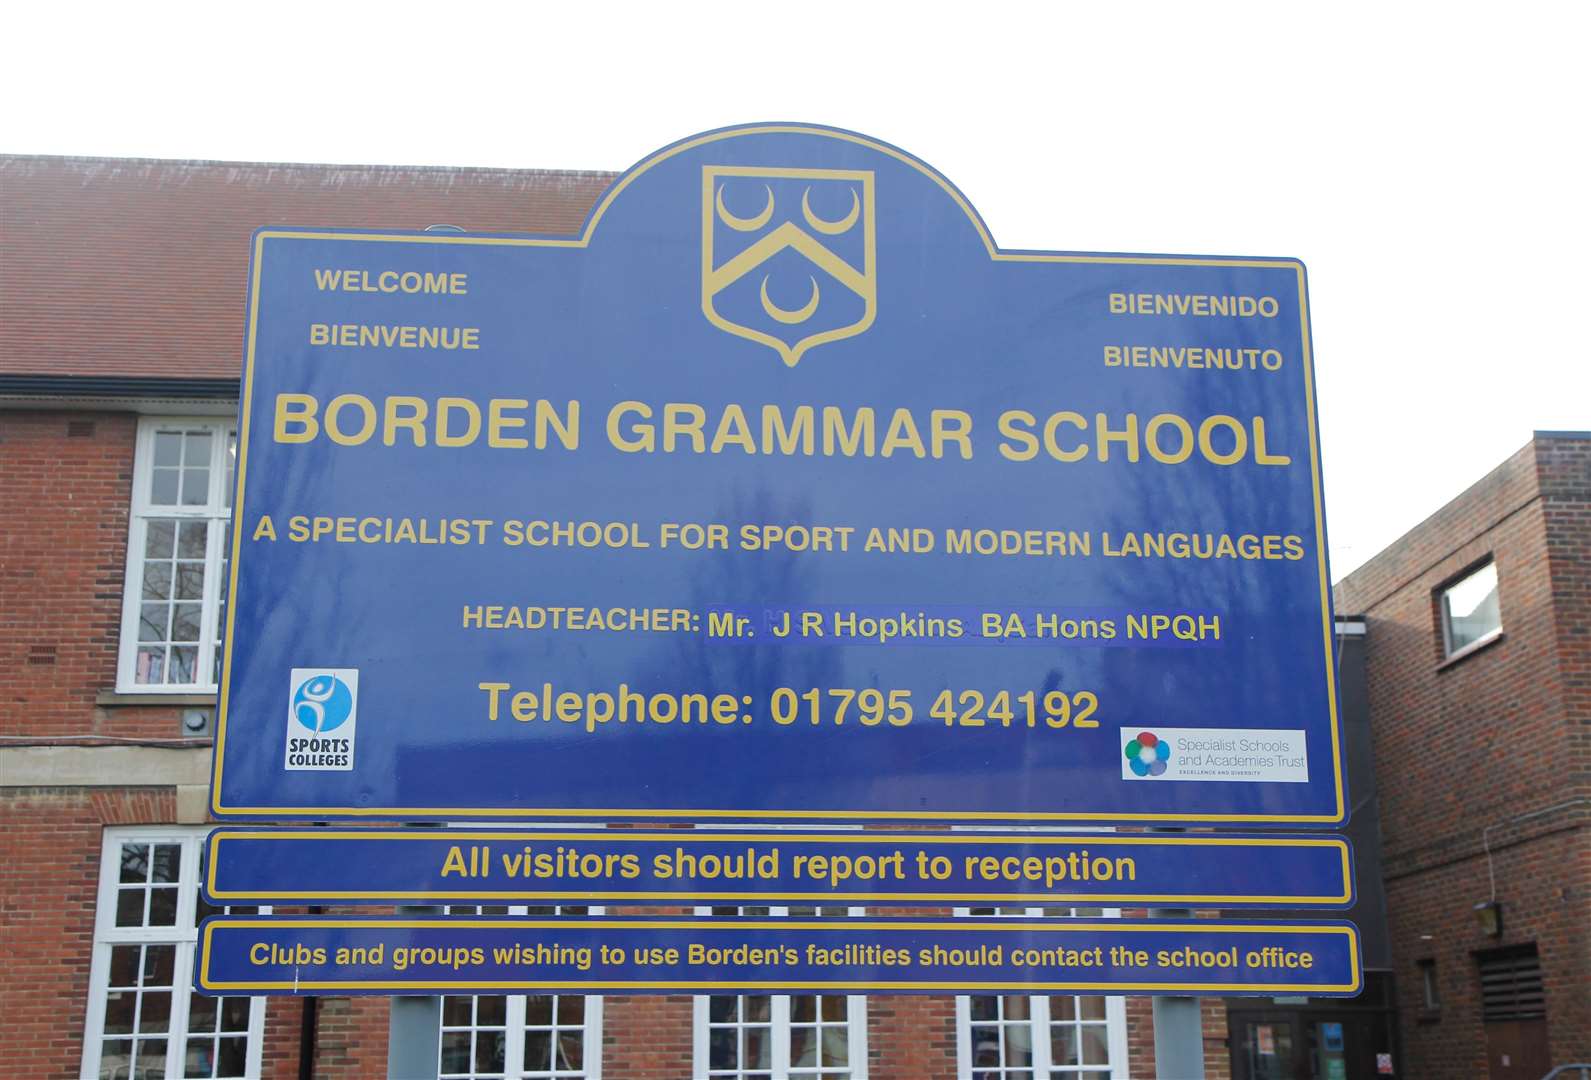 Borden Grammar School in Sittingbourne